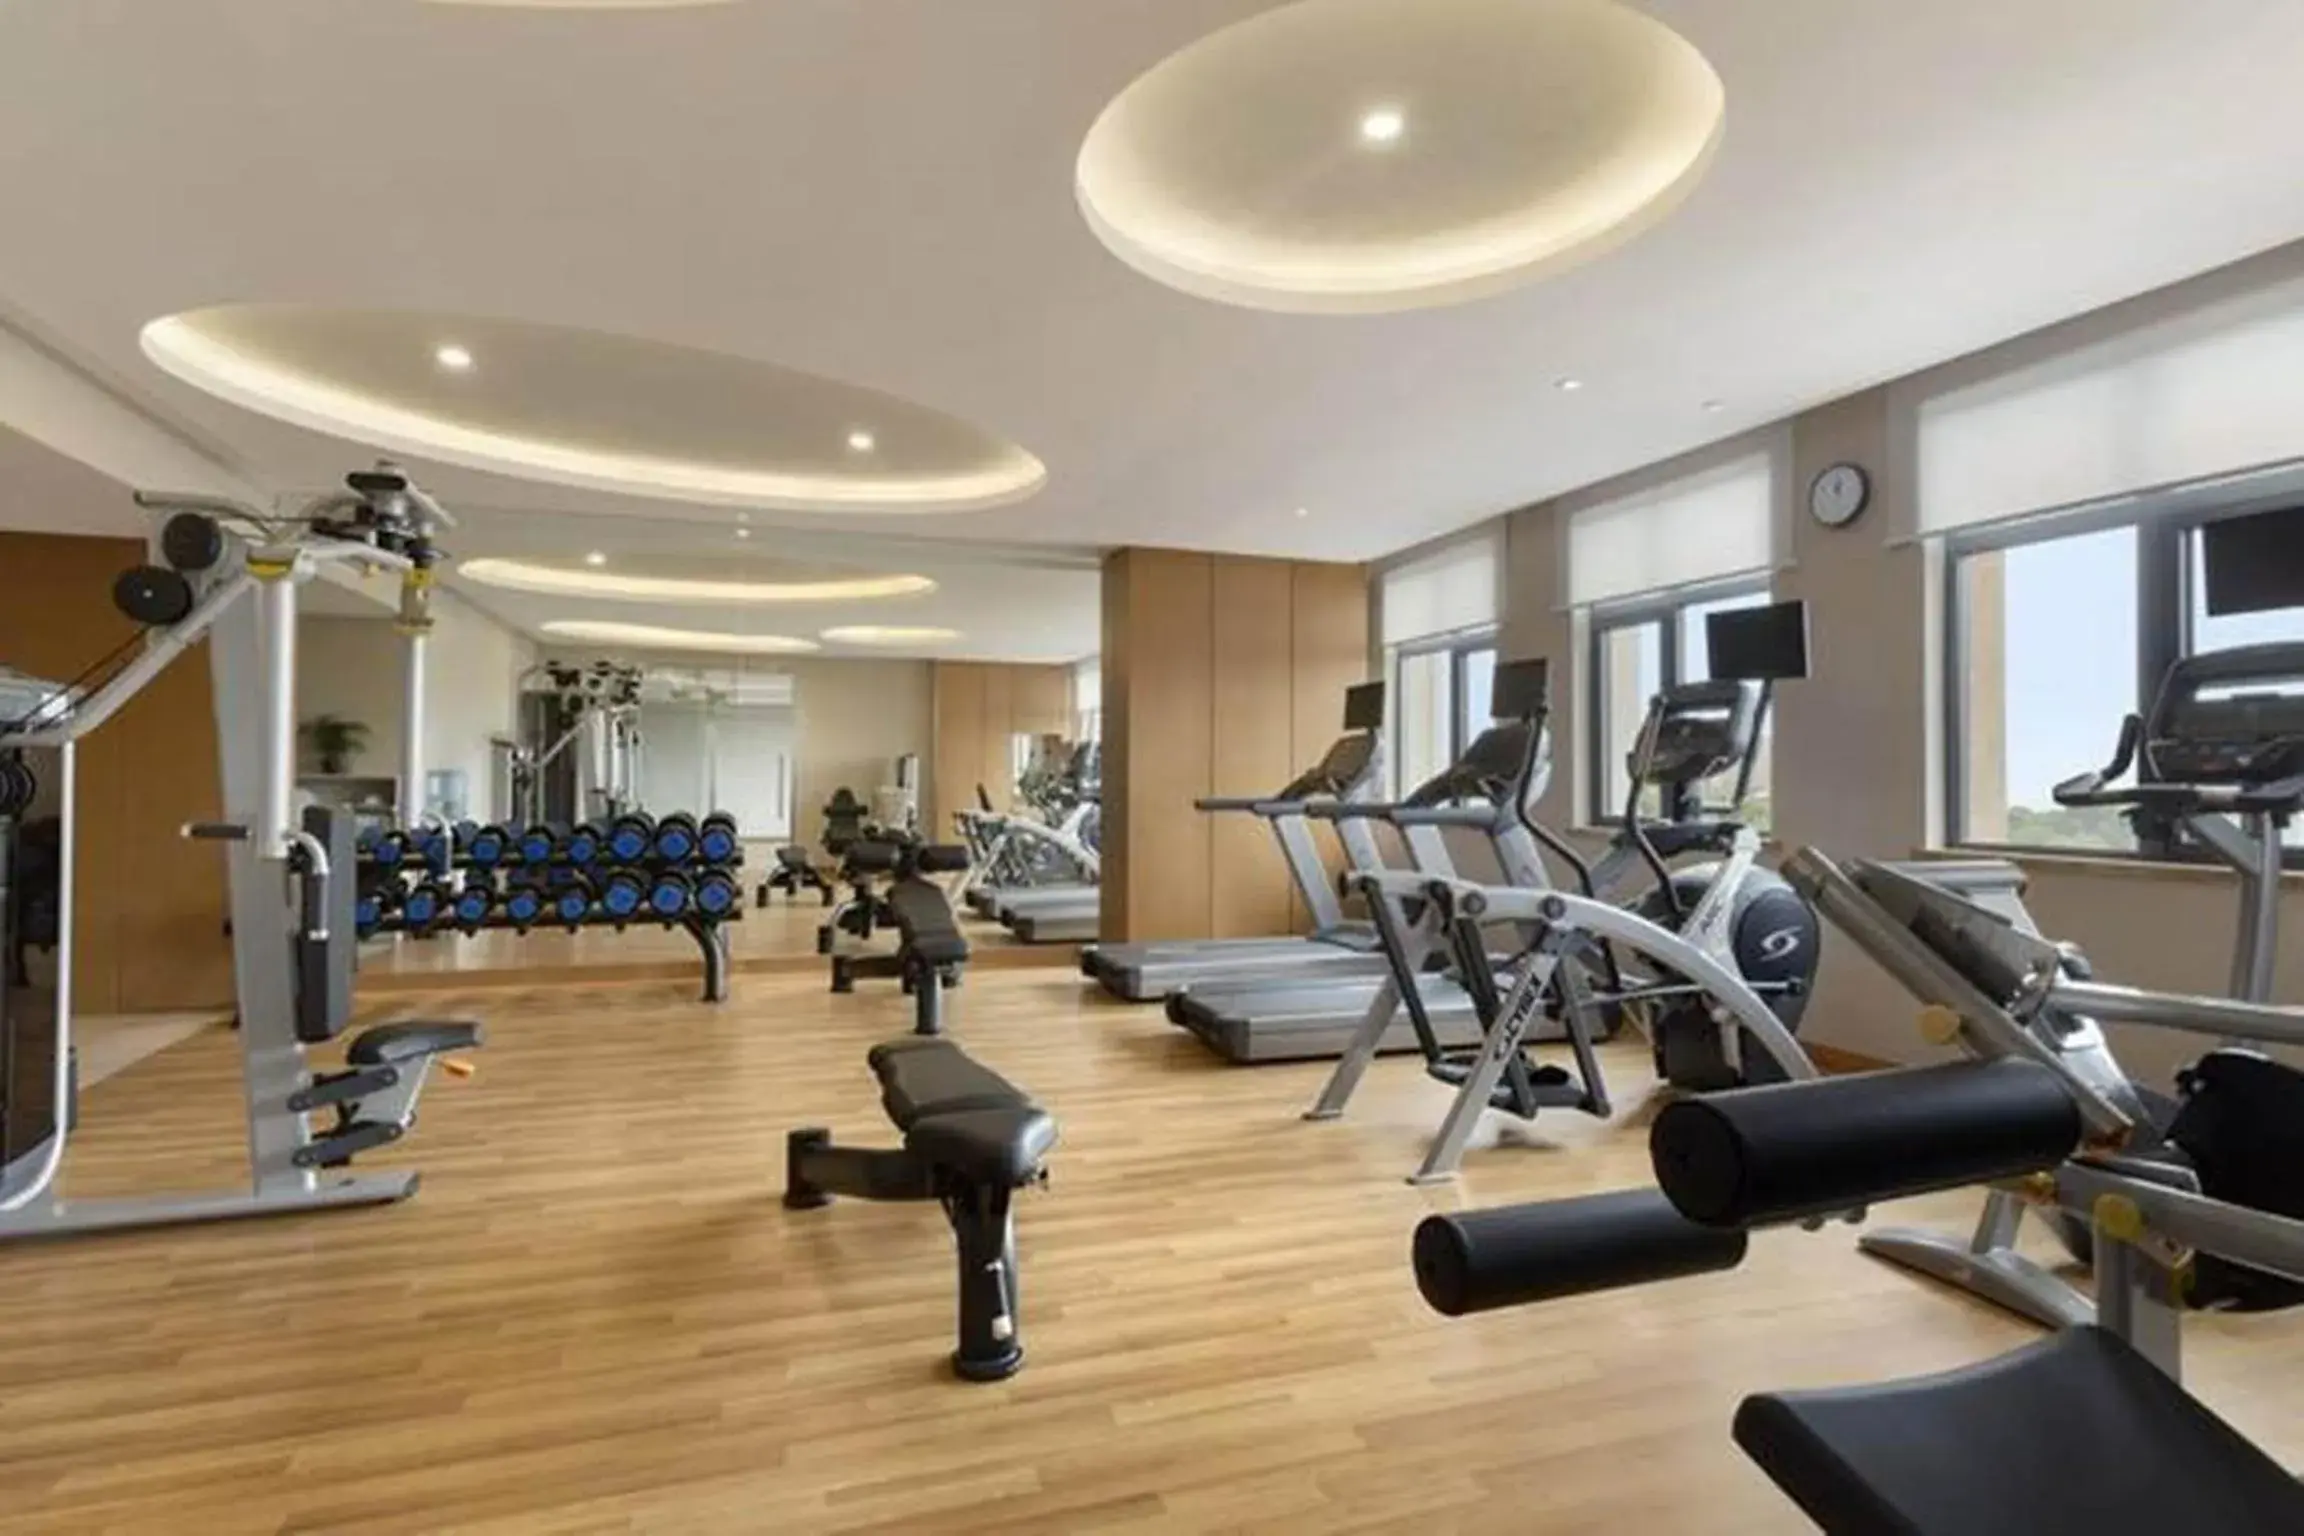 Fitness centre/facilities, Fitness Center/Facilities in Ramada Suzhou